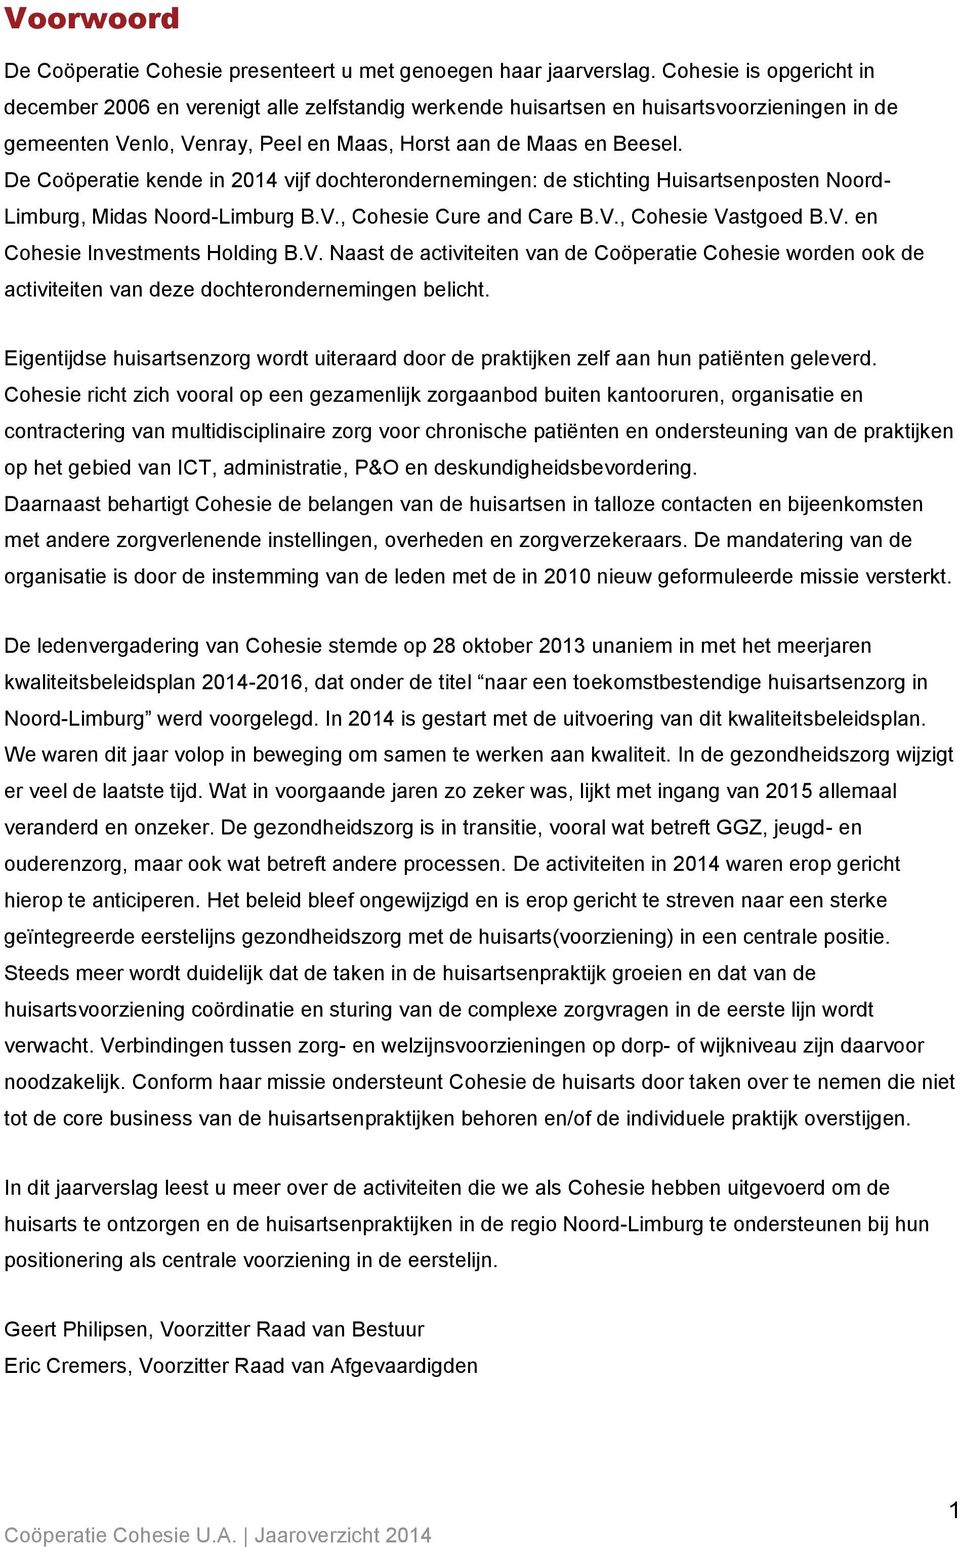 De Coöperatie kende in 2014 vijf dochterondernemingen: de stichting Huisartsenposten Noord- Limburg, Midas Noord-Limburg B.V., Cohesie Cure and Care B.V., Cohesie Vastgoed B.V. en Cohesie Investments Holding B.